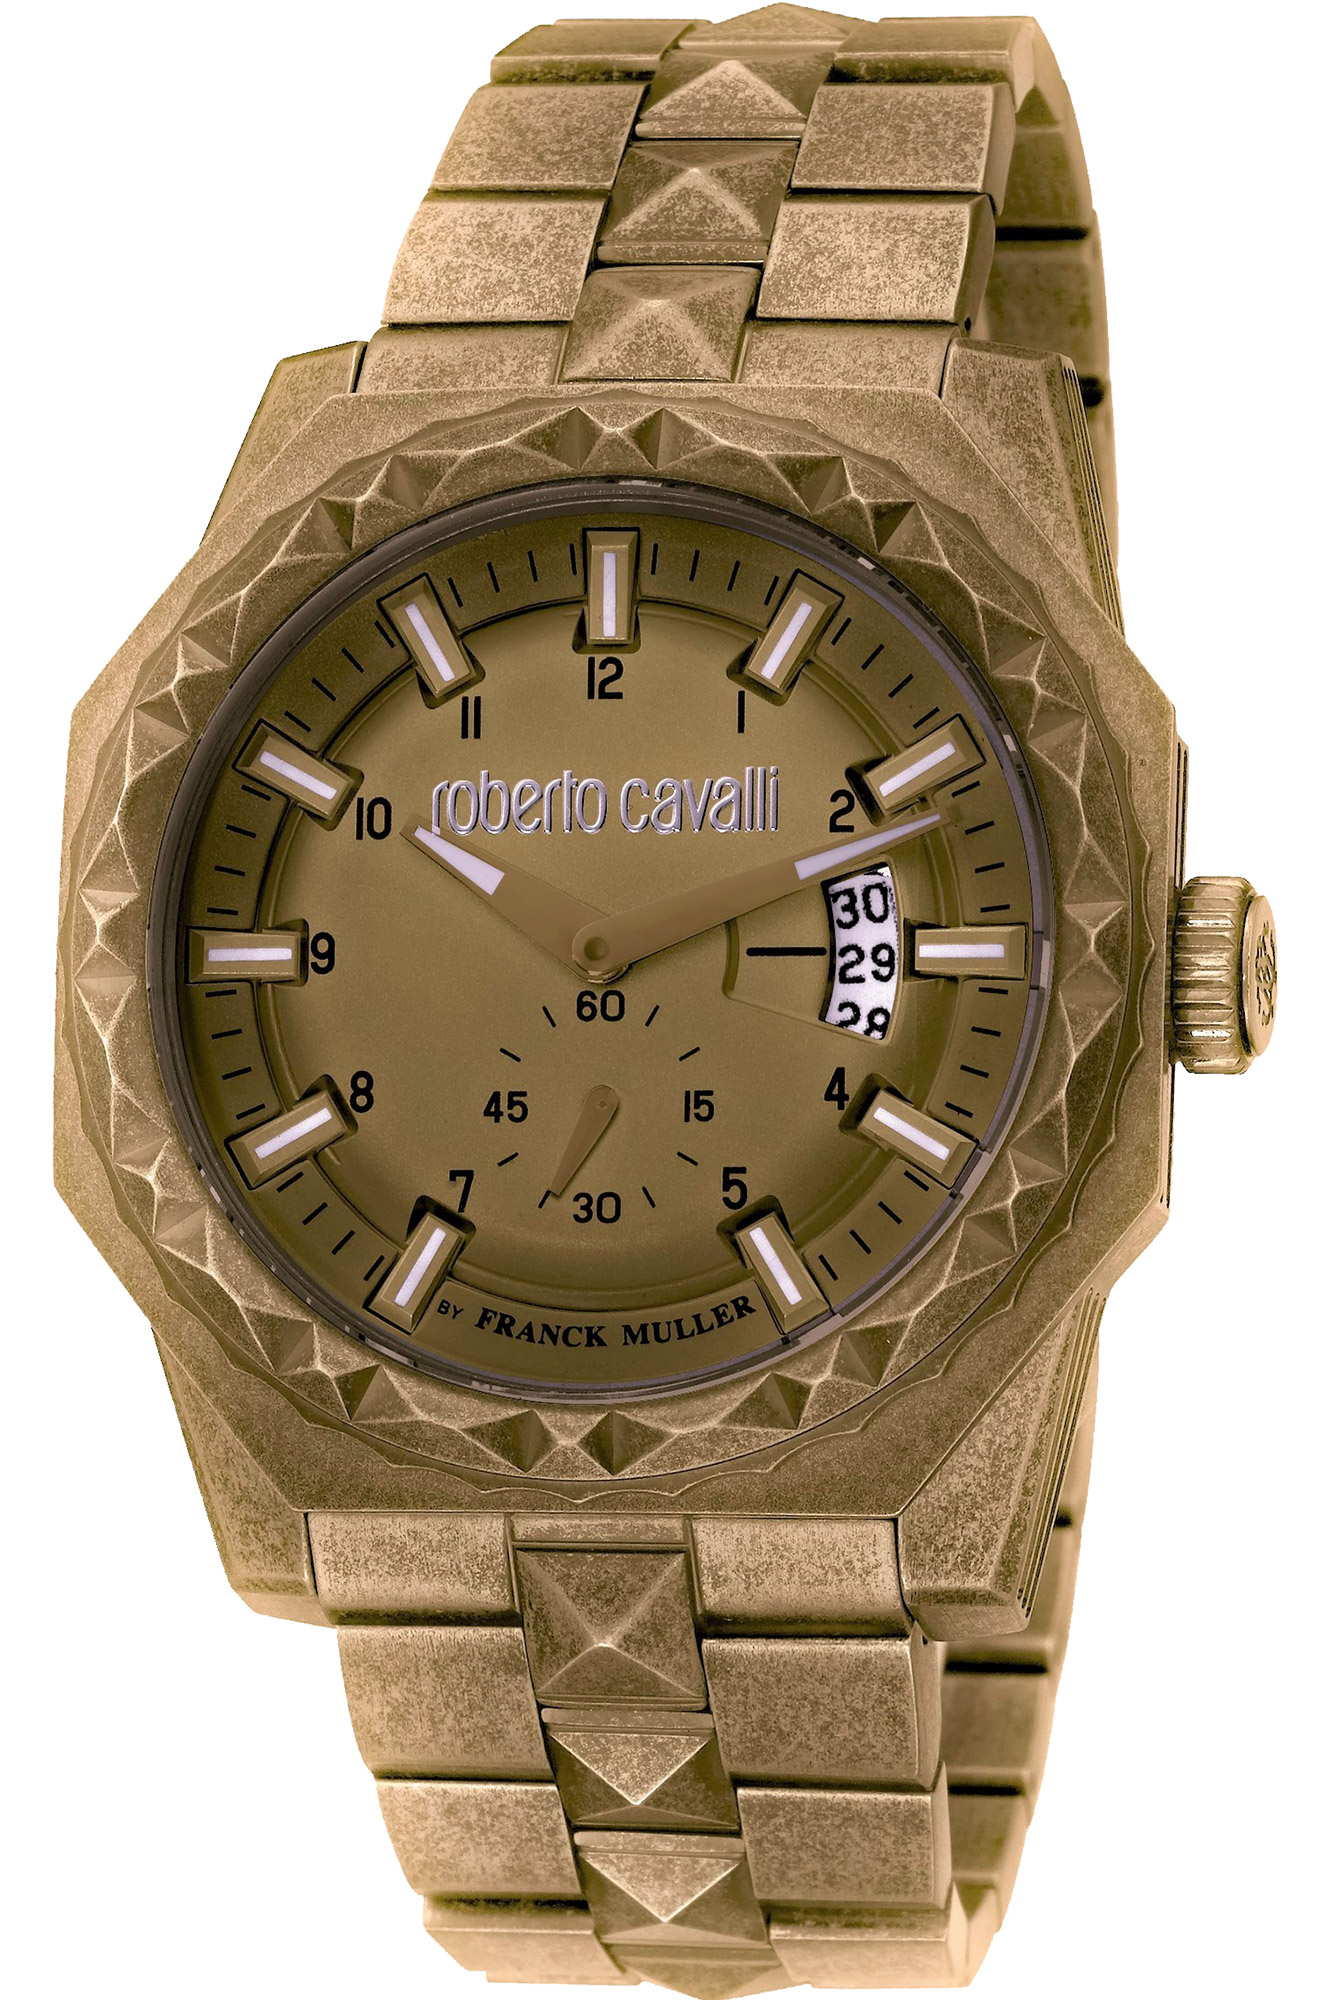 Watch Roberto Cavalli by Franck Muller rv1g069m0076